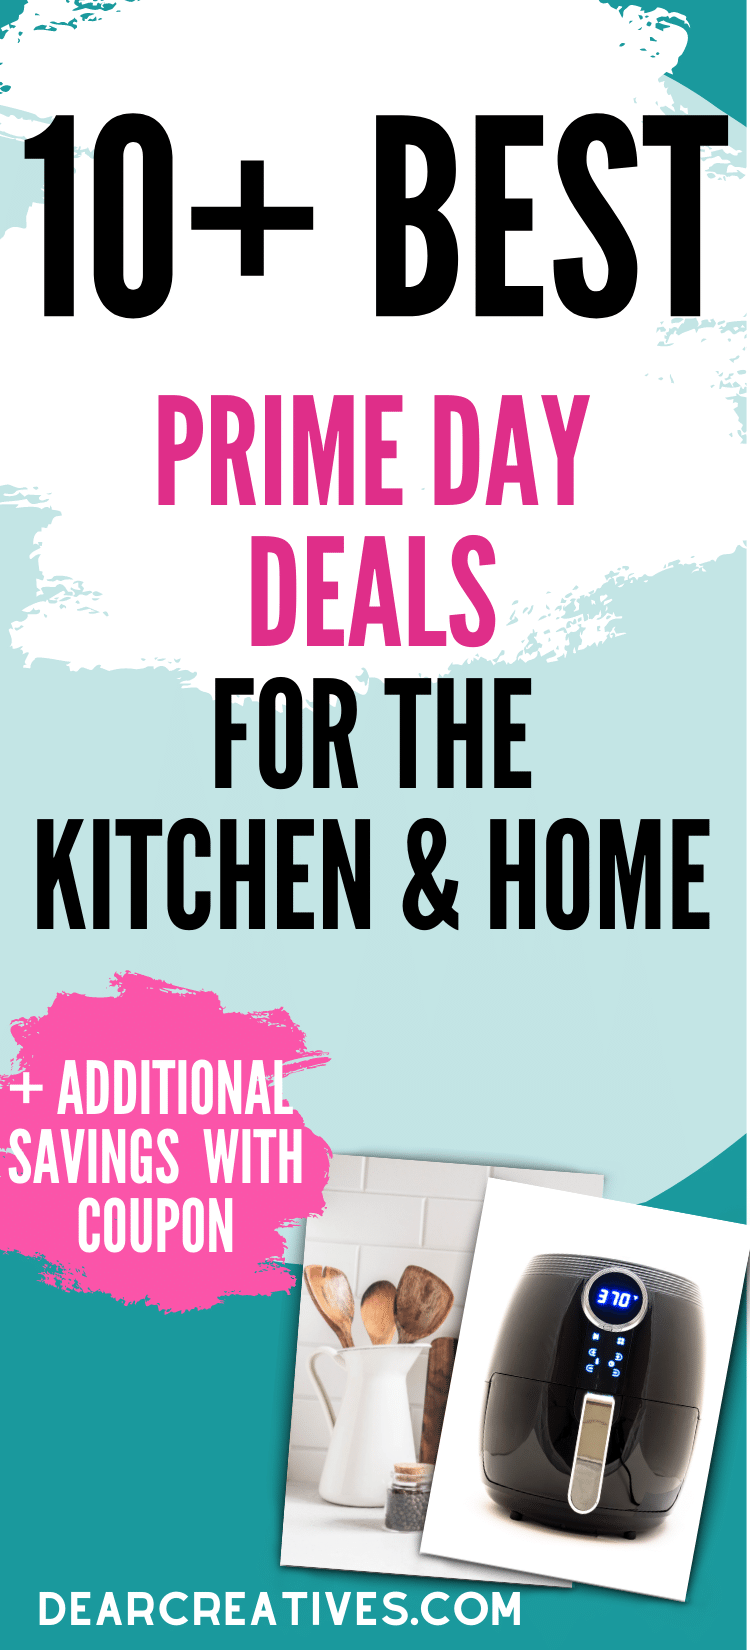 Prime Day Deals – 10+ Kitchen & Home Deals!